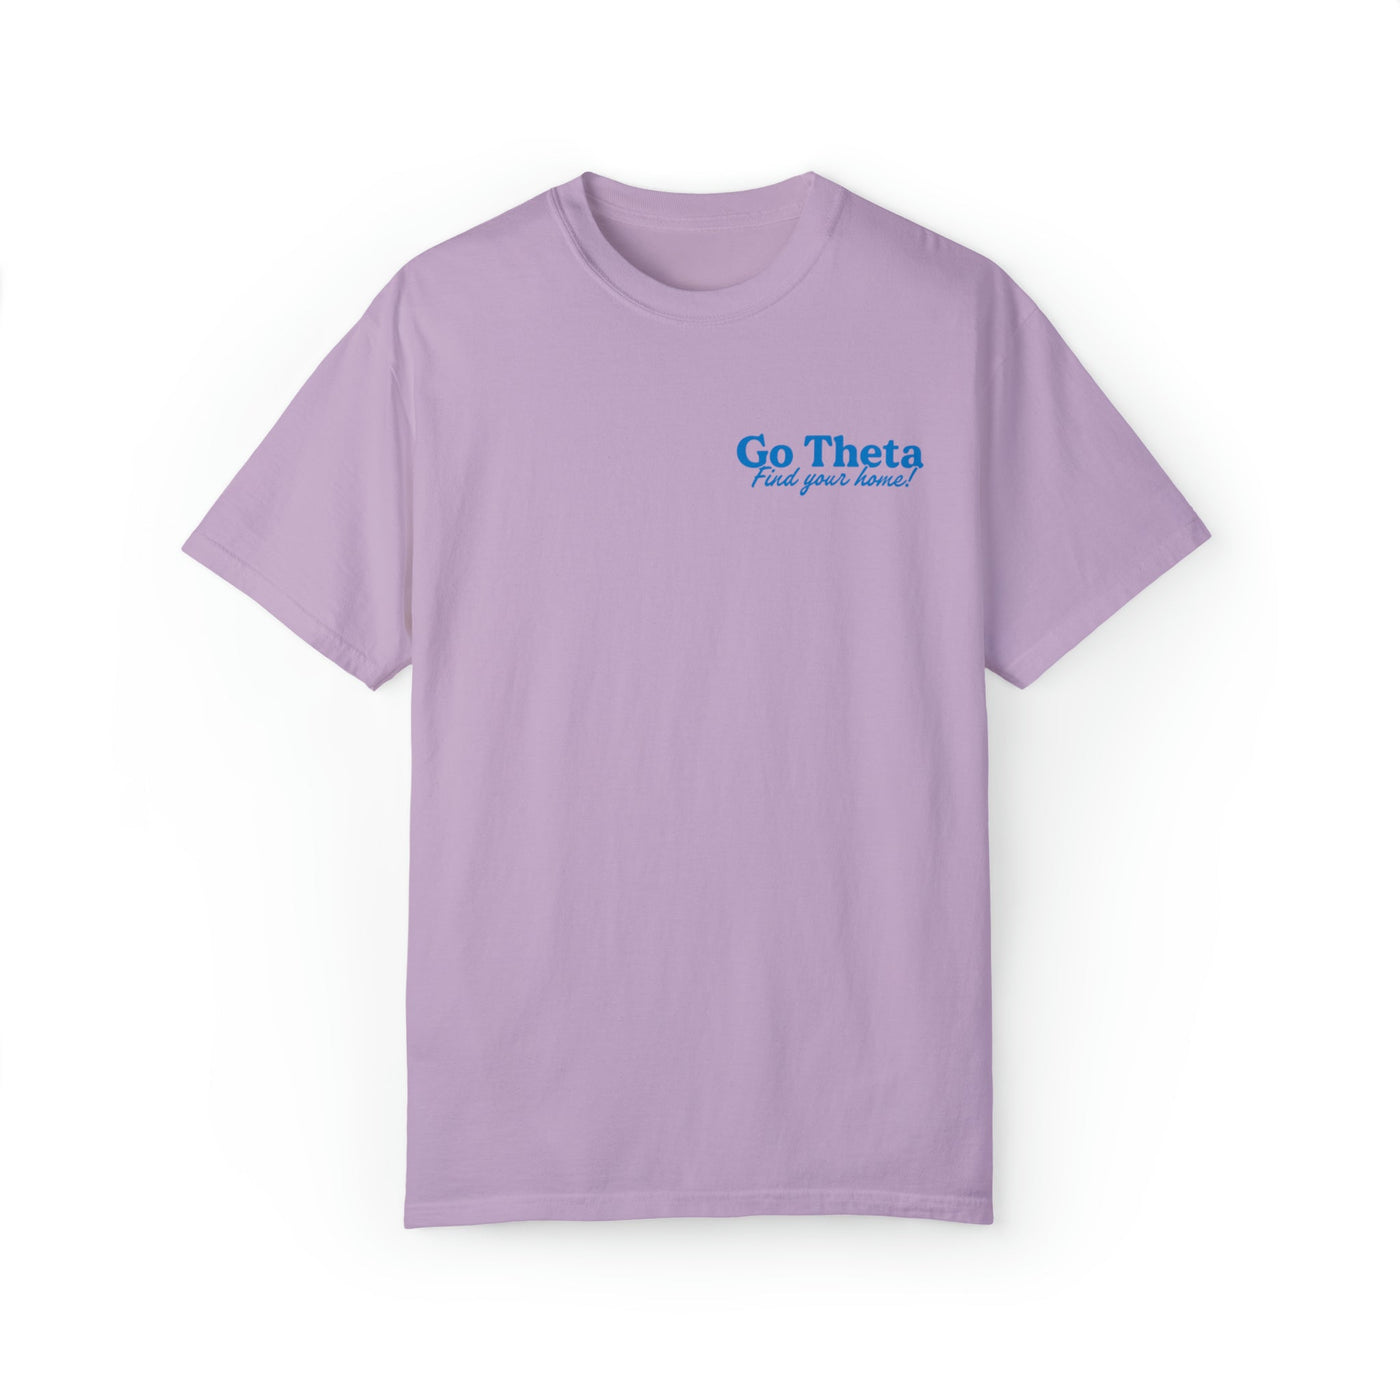 Kappa Alpha Theta Teddy Bear Sorority T-shirt